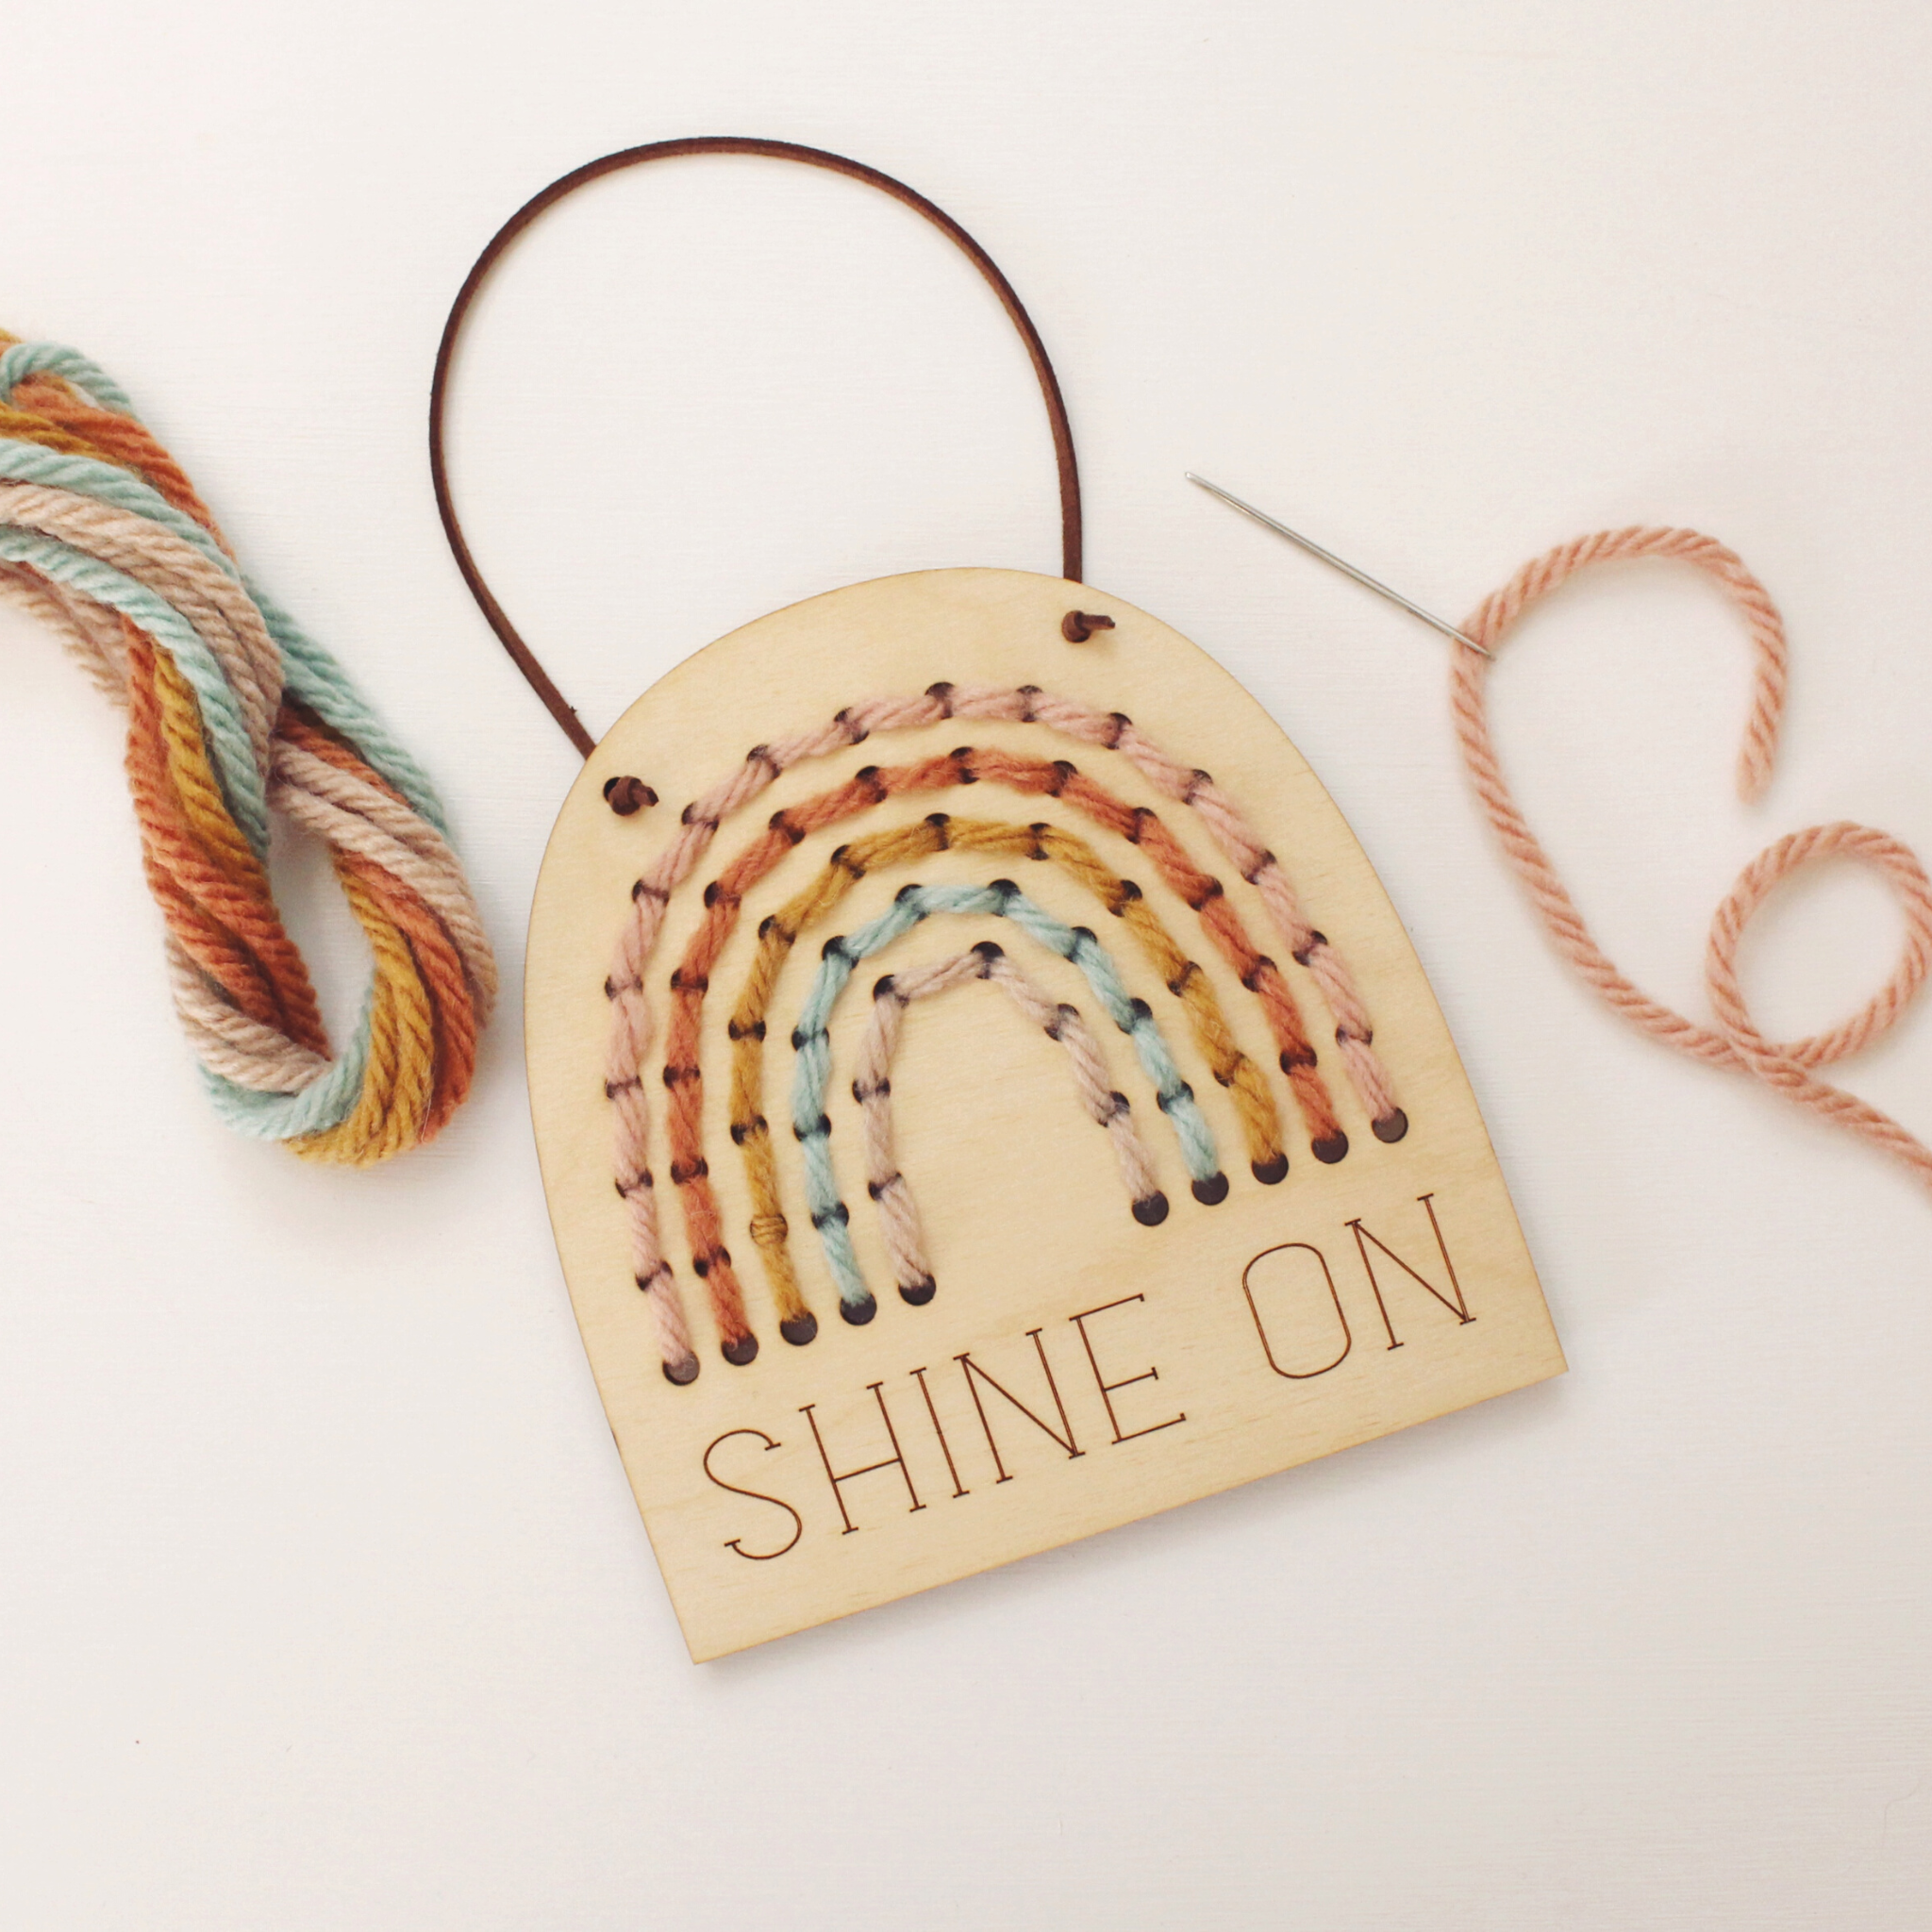 shine on' wooden rainbow banner diy stitching kit